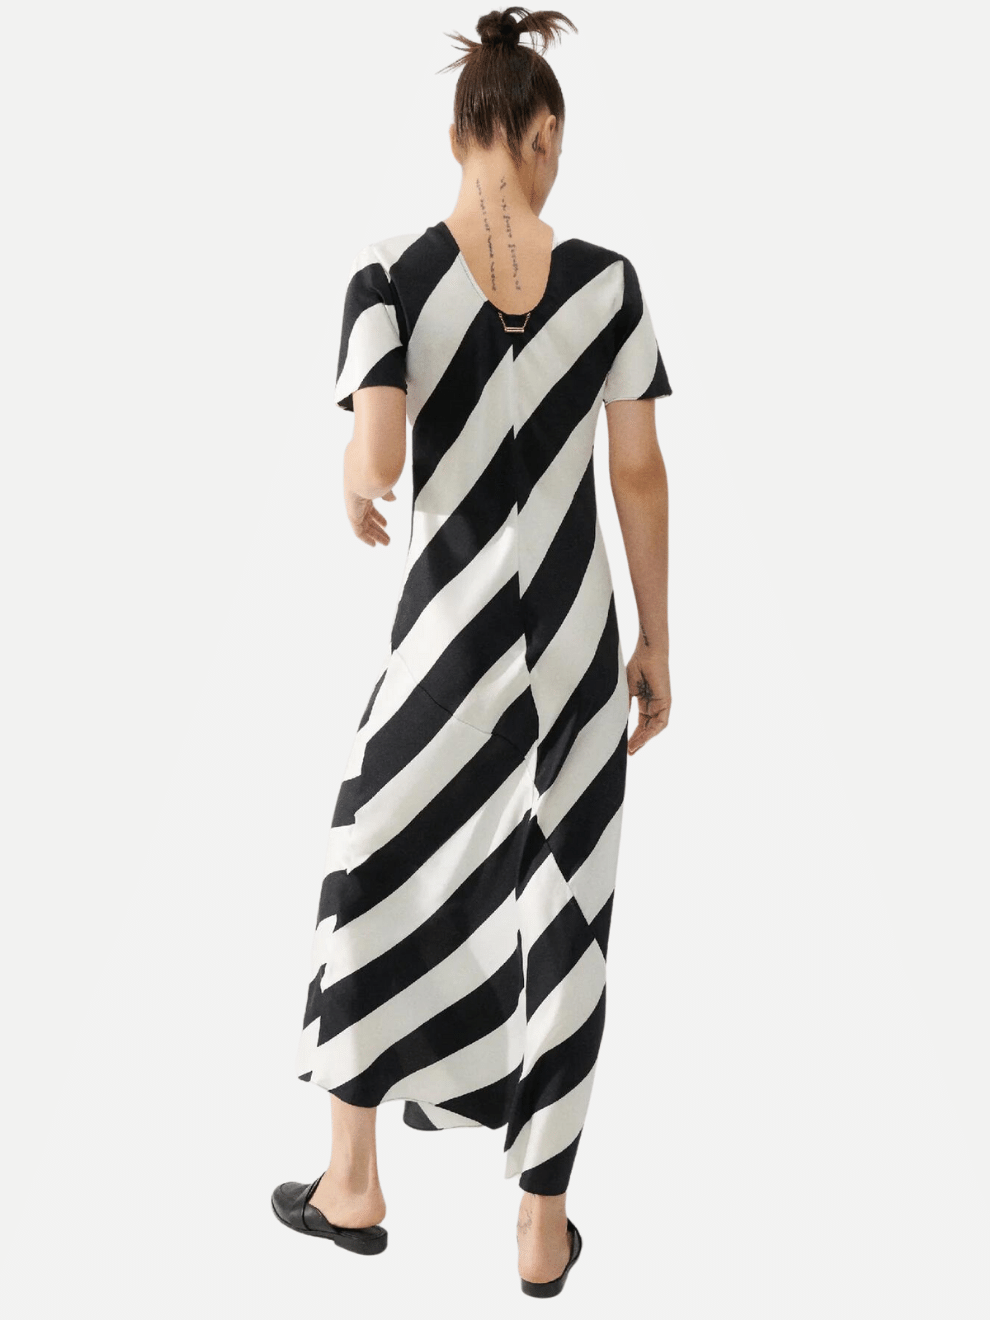 Short Sleeve Bias Dress in Puffin Stripe